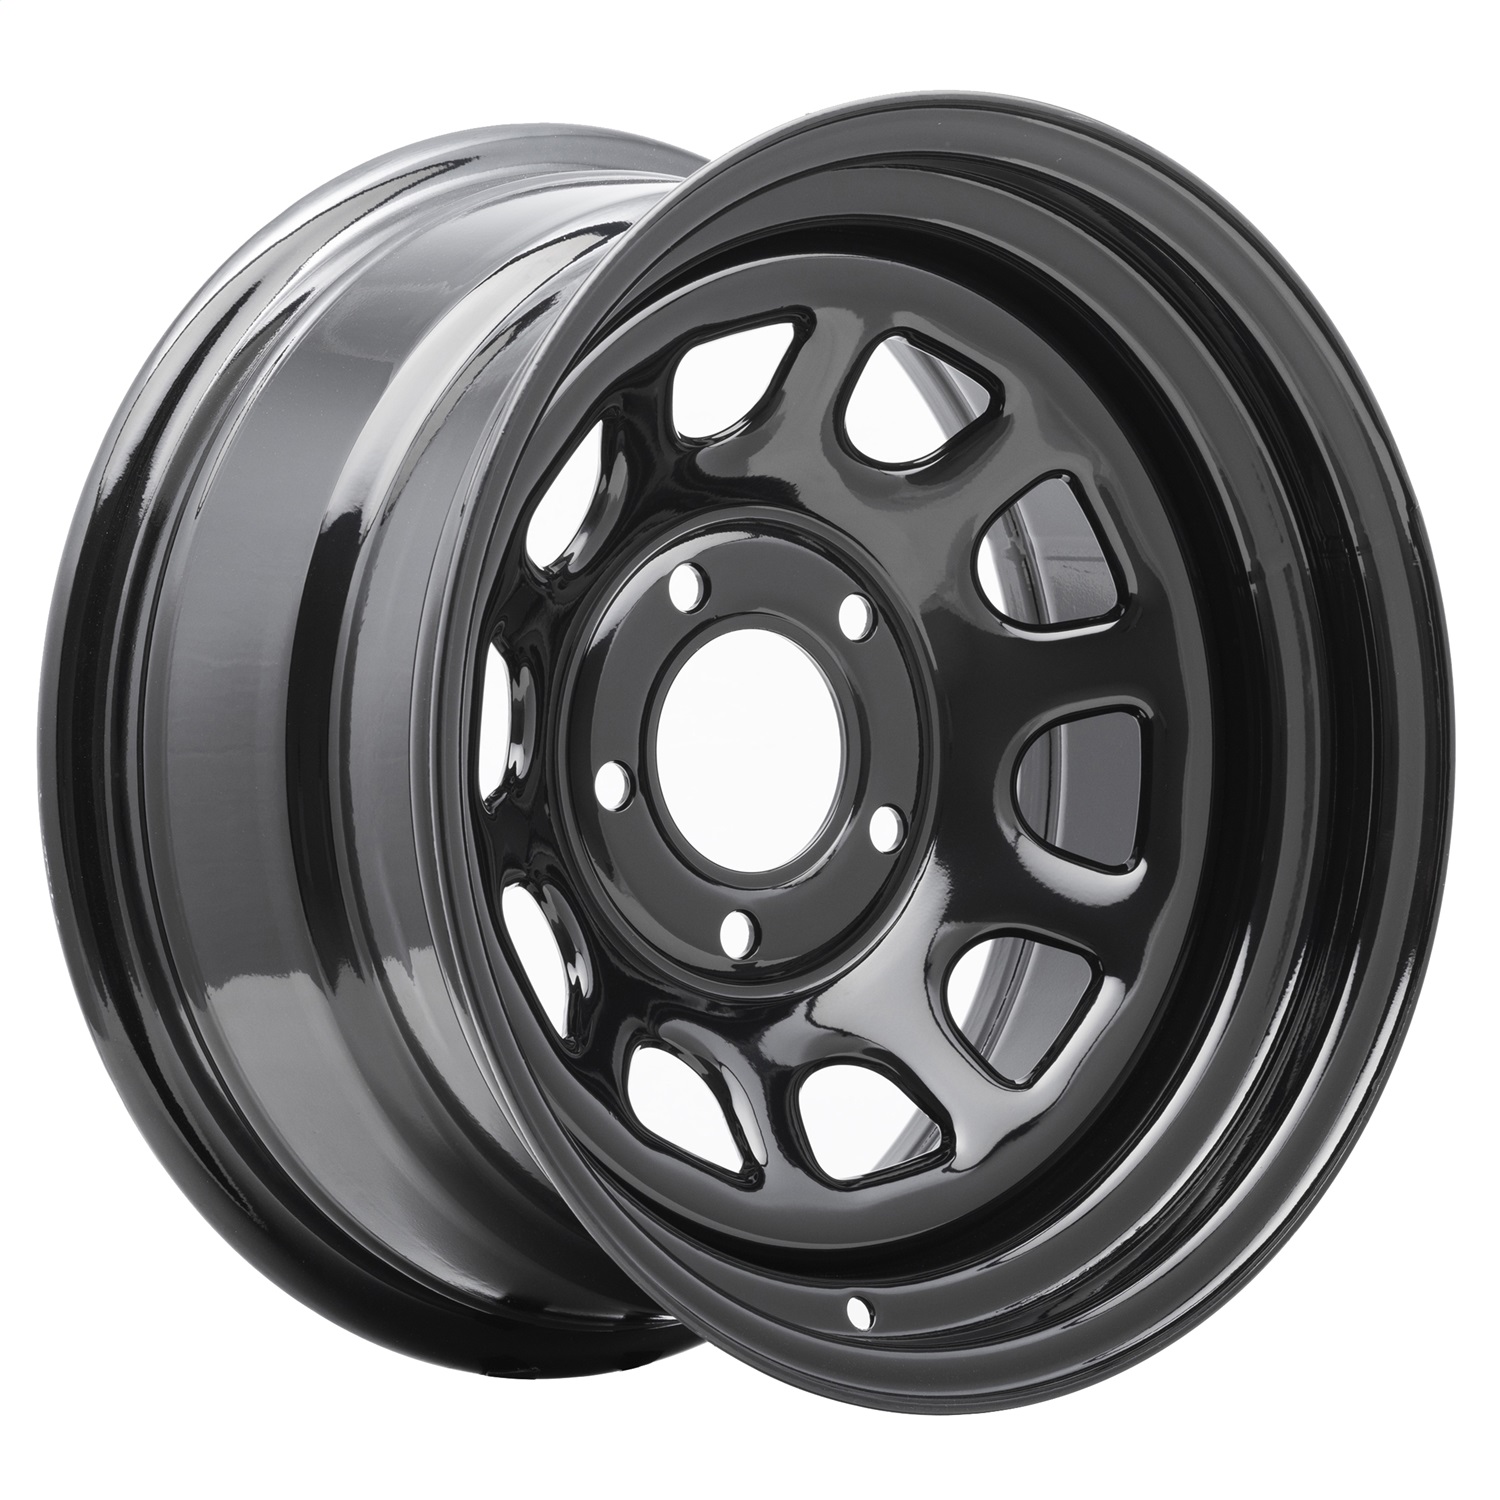 Pro Comp Wheels 51-7973 Rock Crawler Series 51 Black Wheel